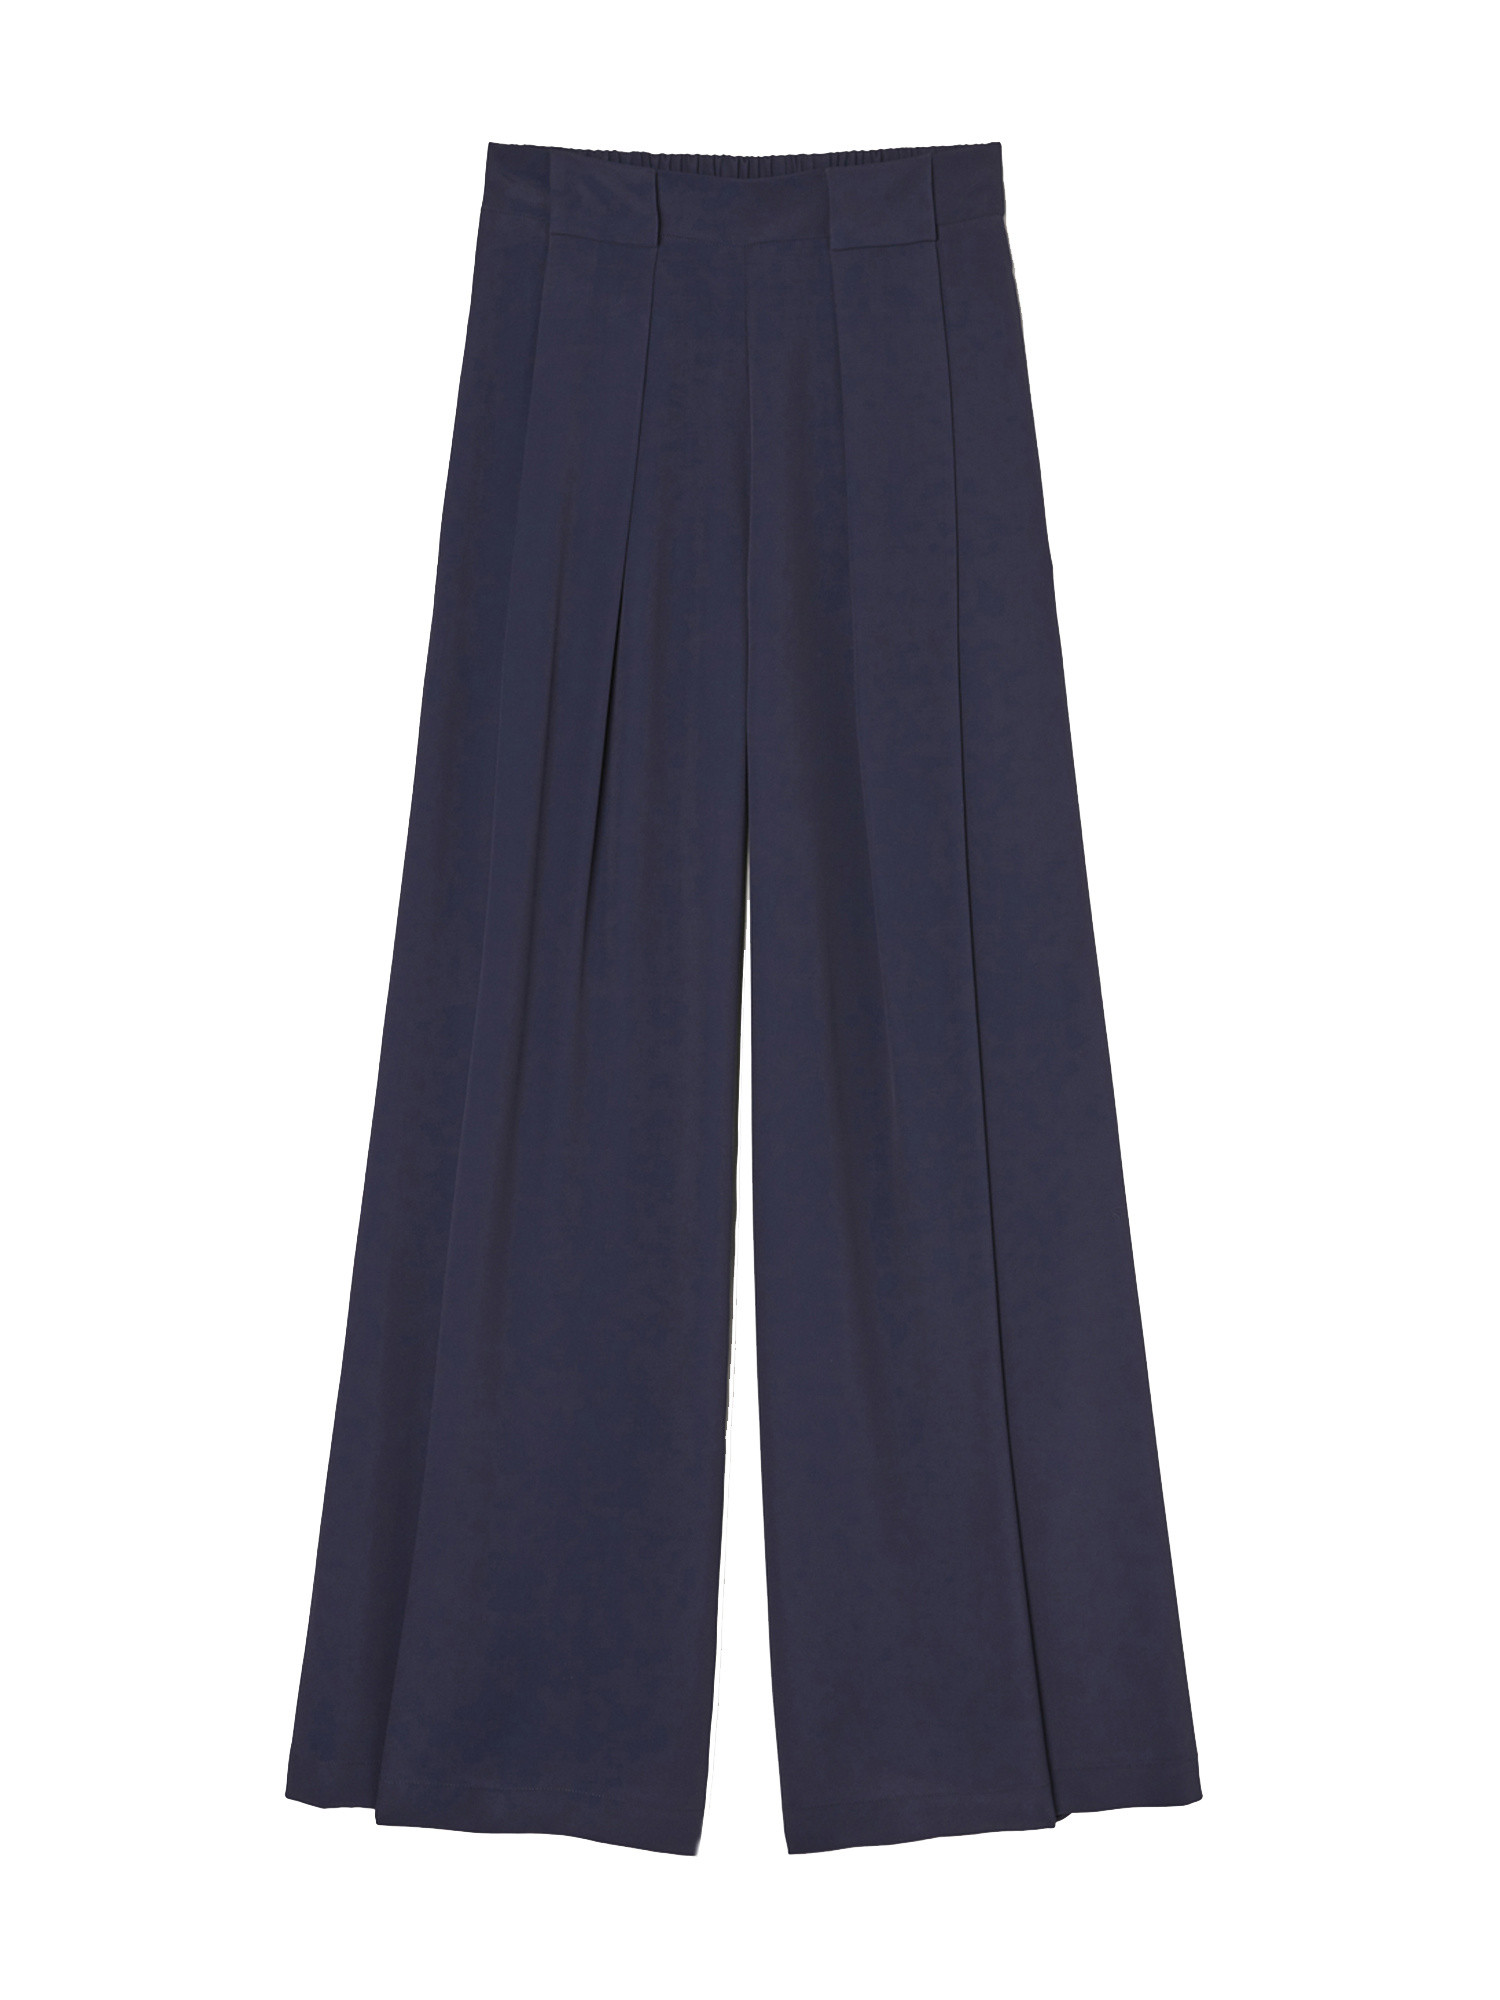 Momonì - Aspen pants in cràªpe-silk blend, Dark Blue, large image number 0